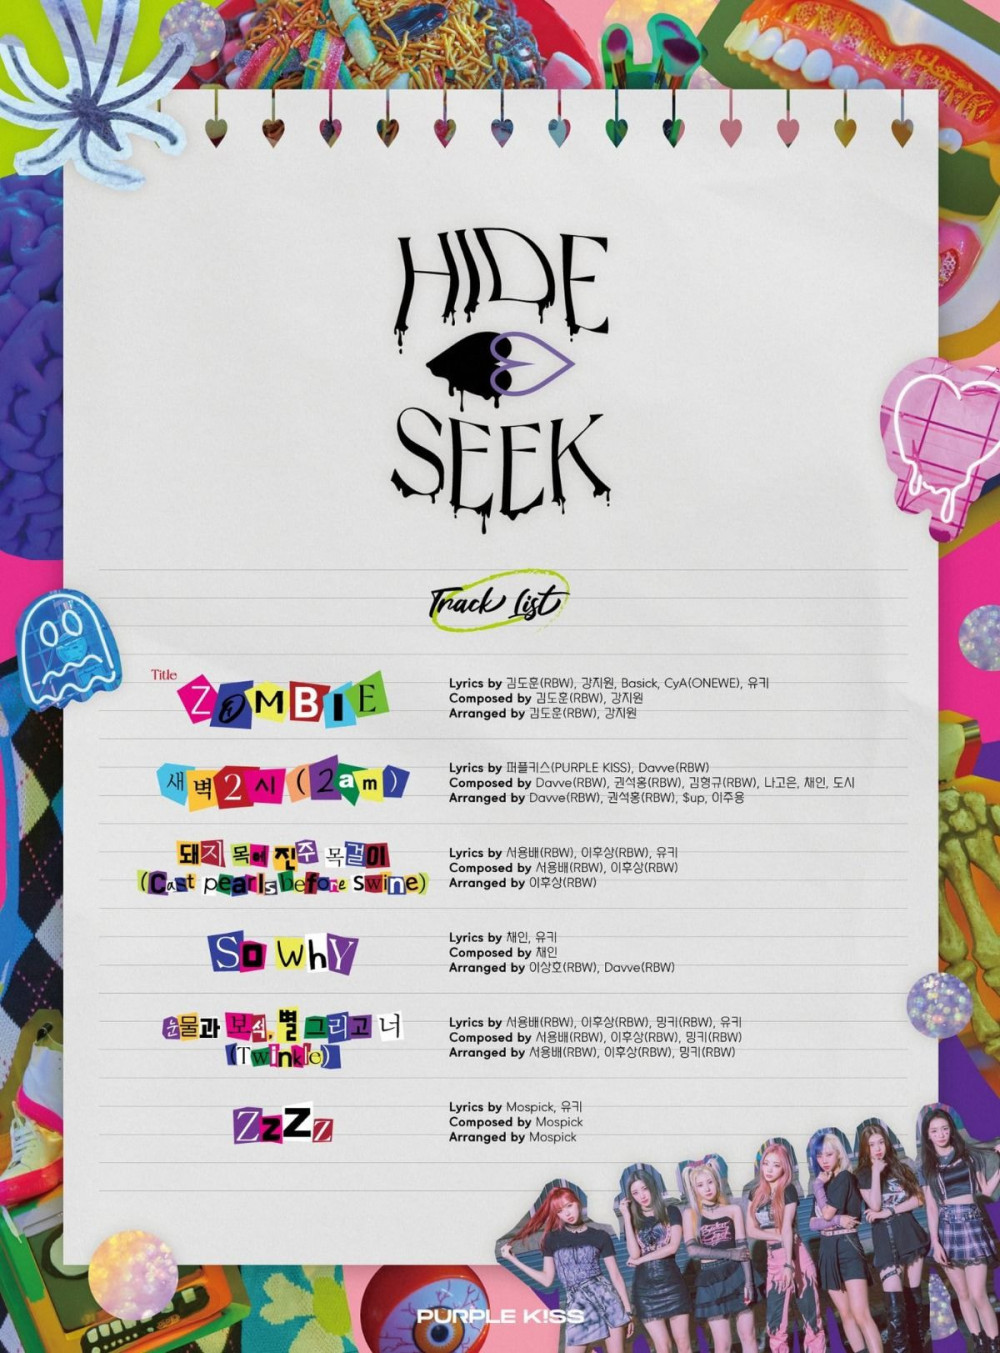 [Камбэк] PURPLE K!SS мини-альбом "Hide & Seek": музыкальный клип на "Cast Pearls Before Swine" (перфоманс-версия)